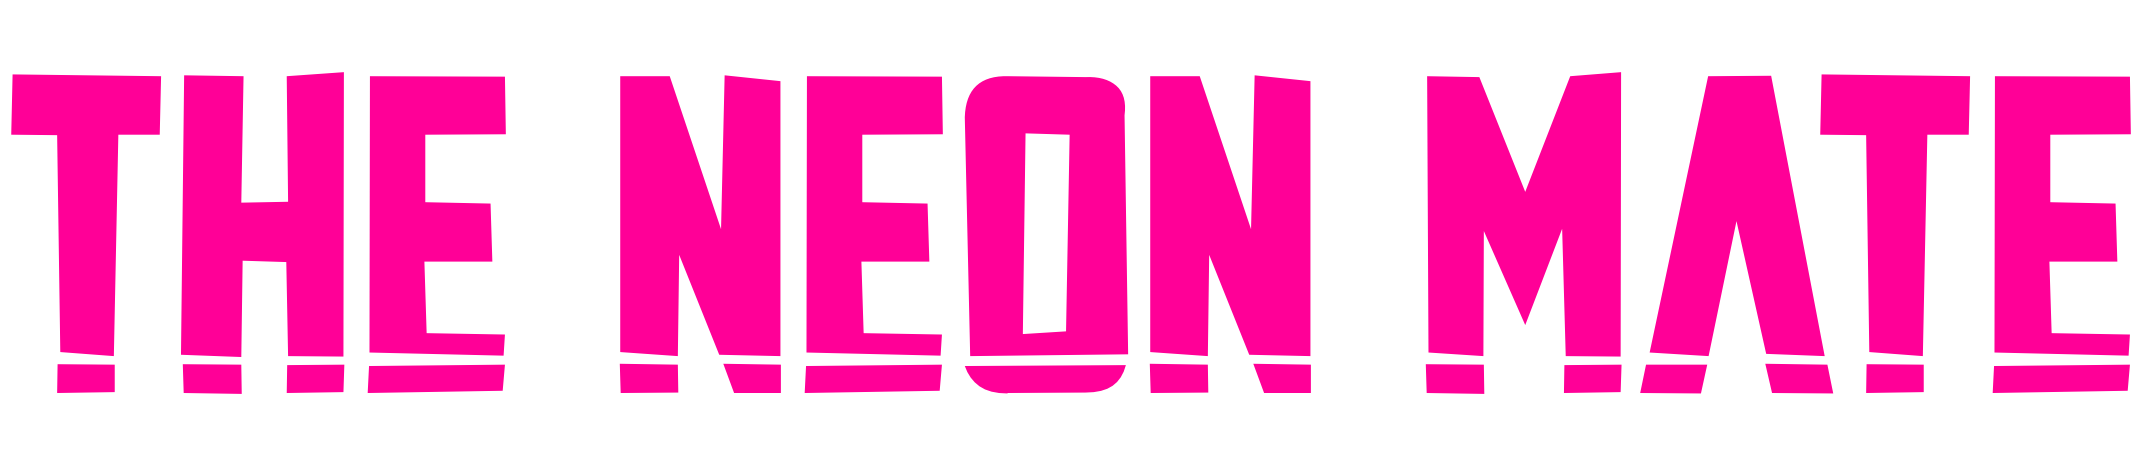 The Neon Mate Logo